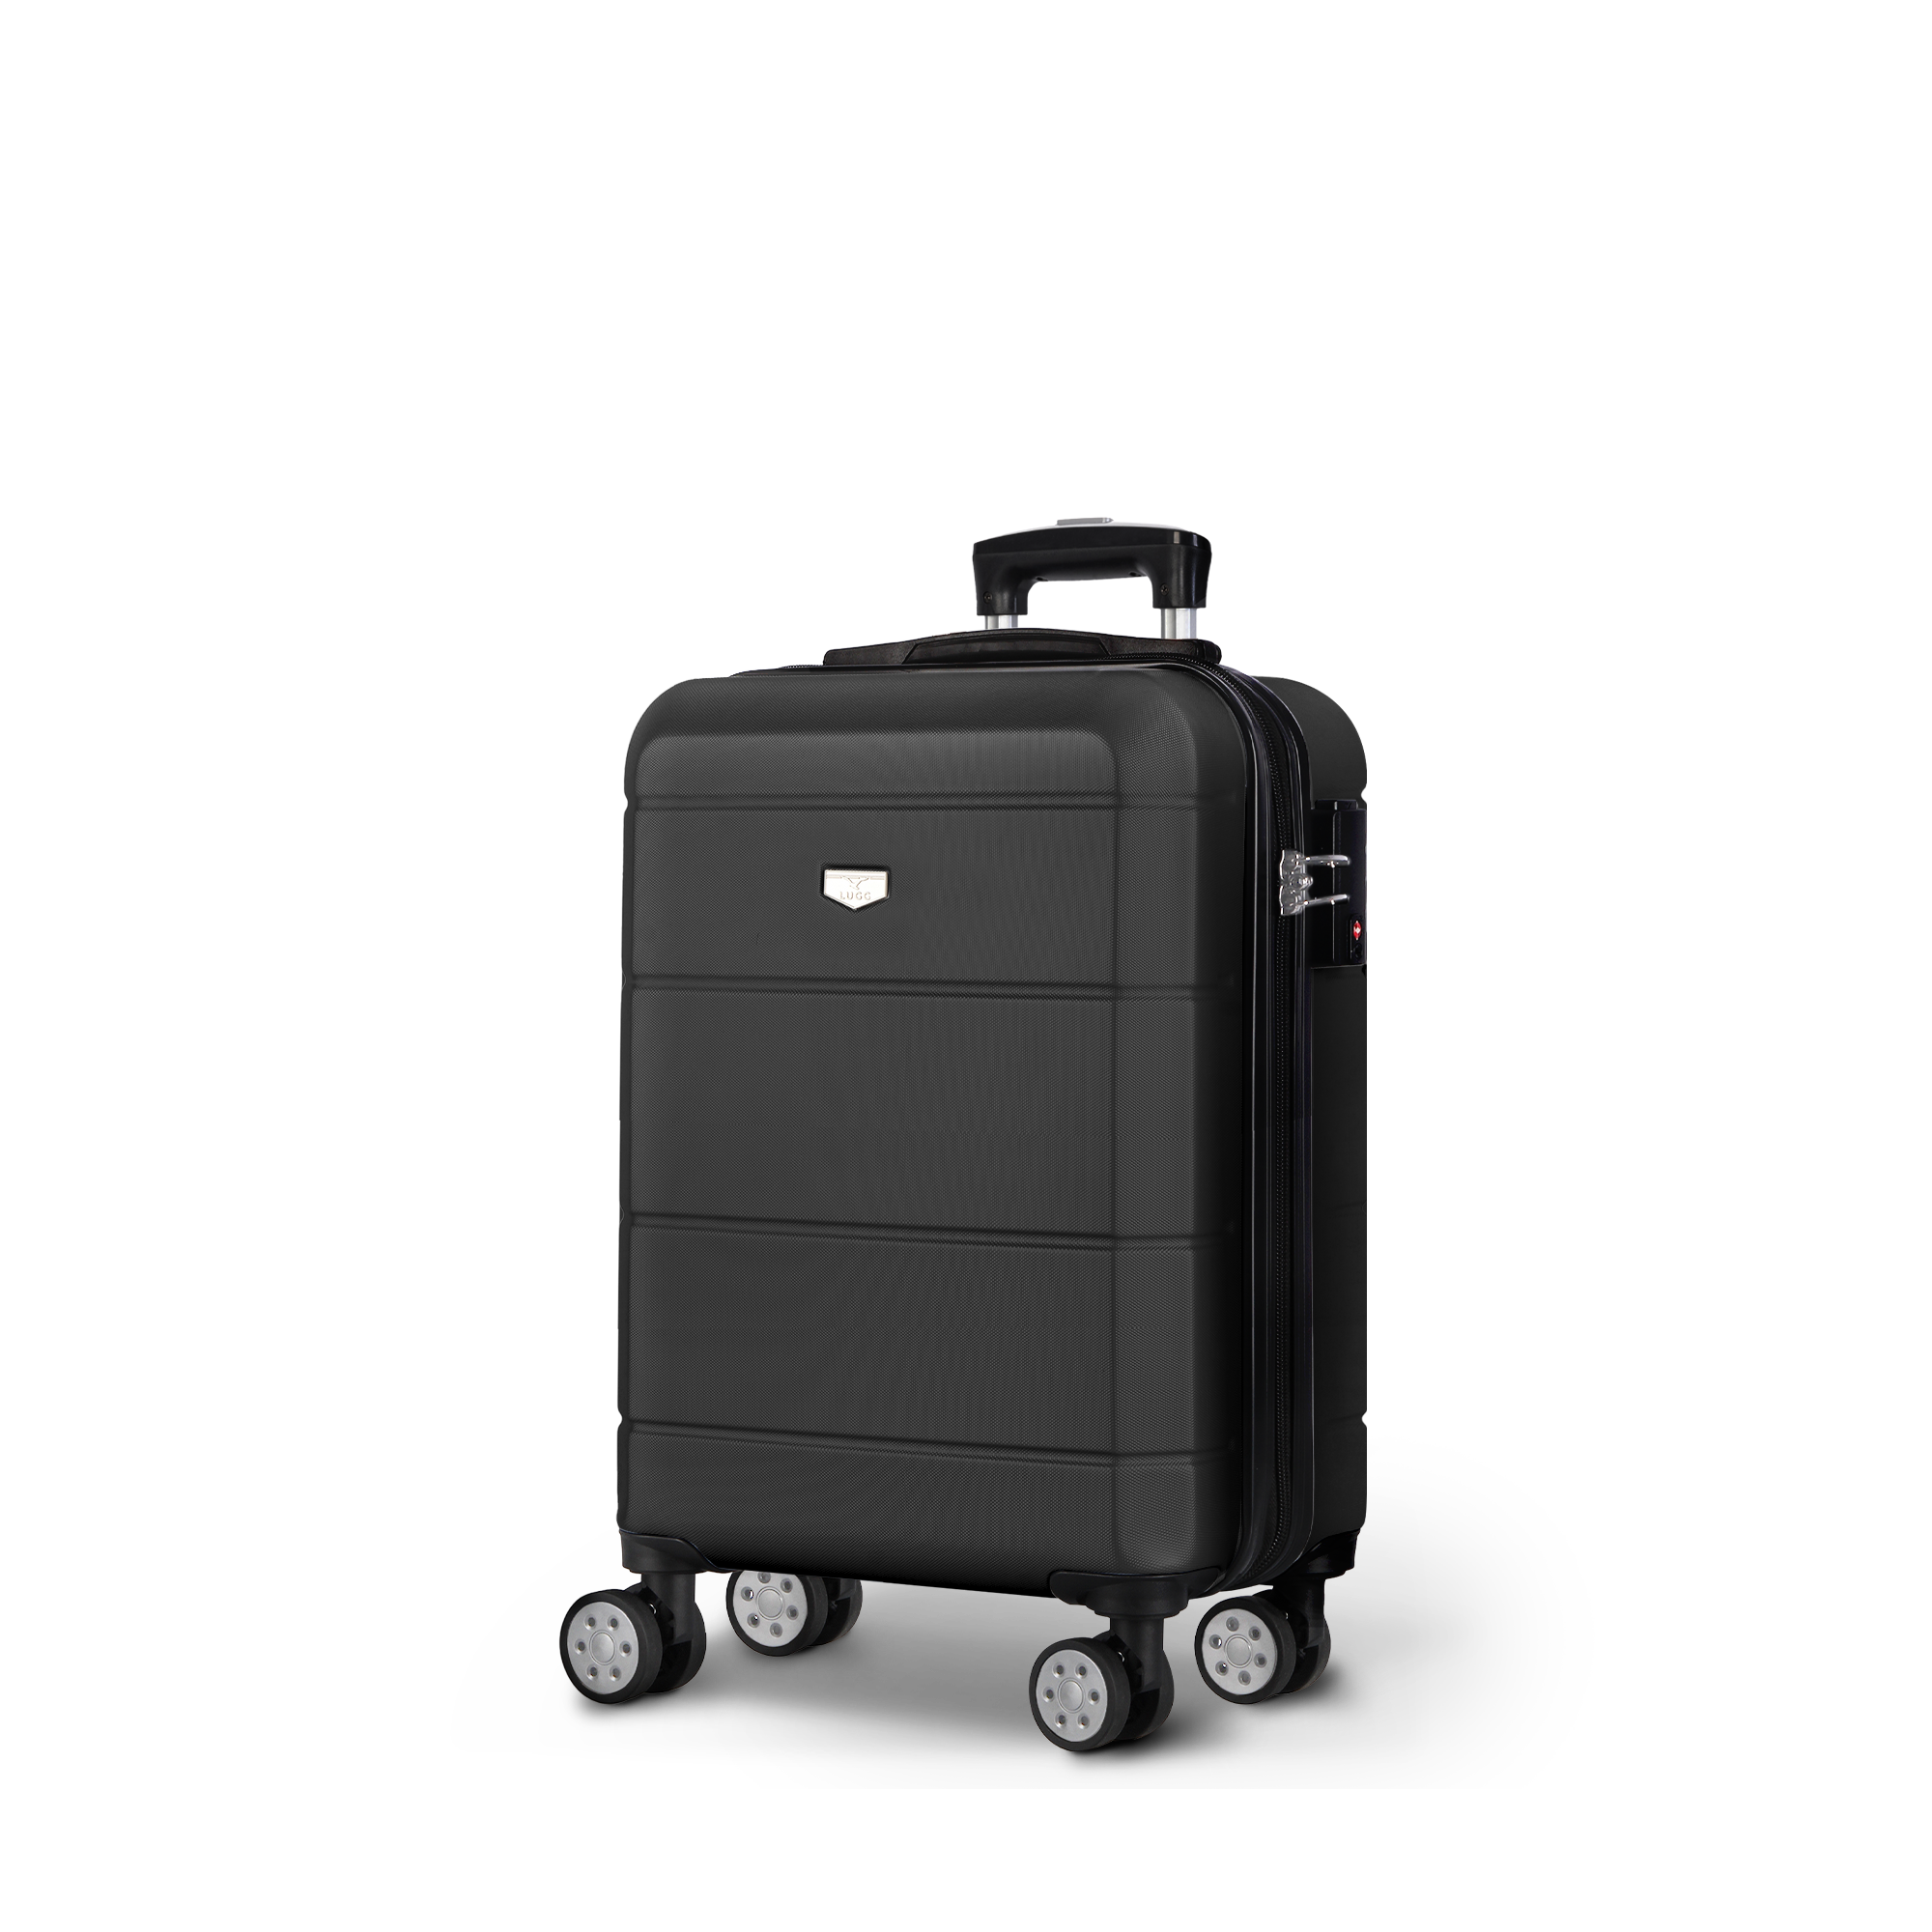 Jetset 20-inch Suitcase in Black